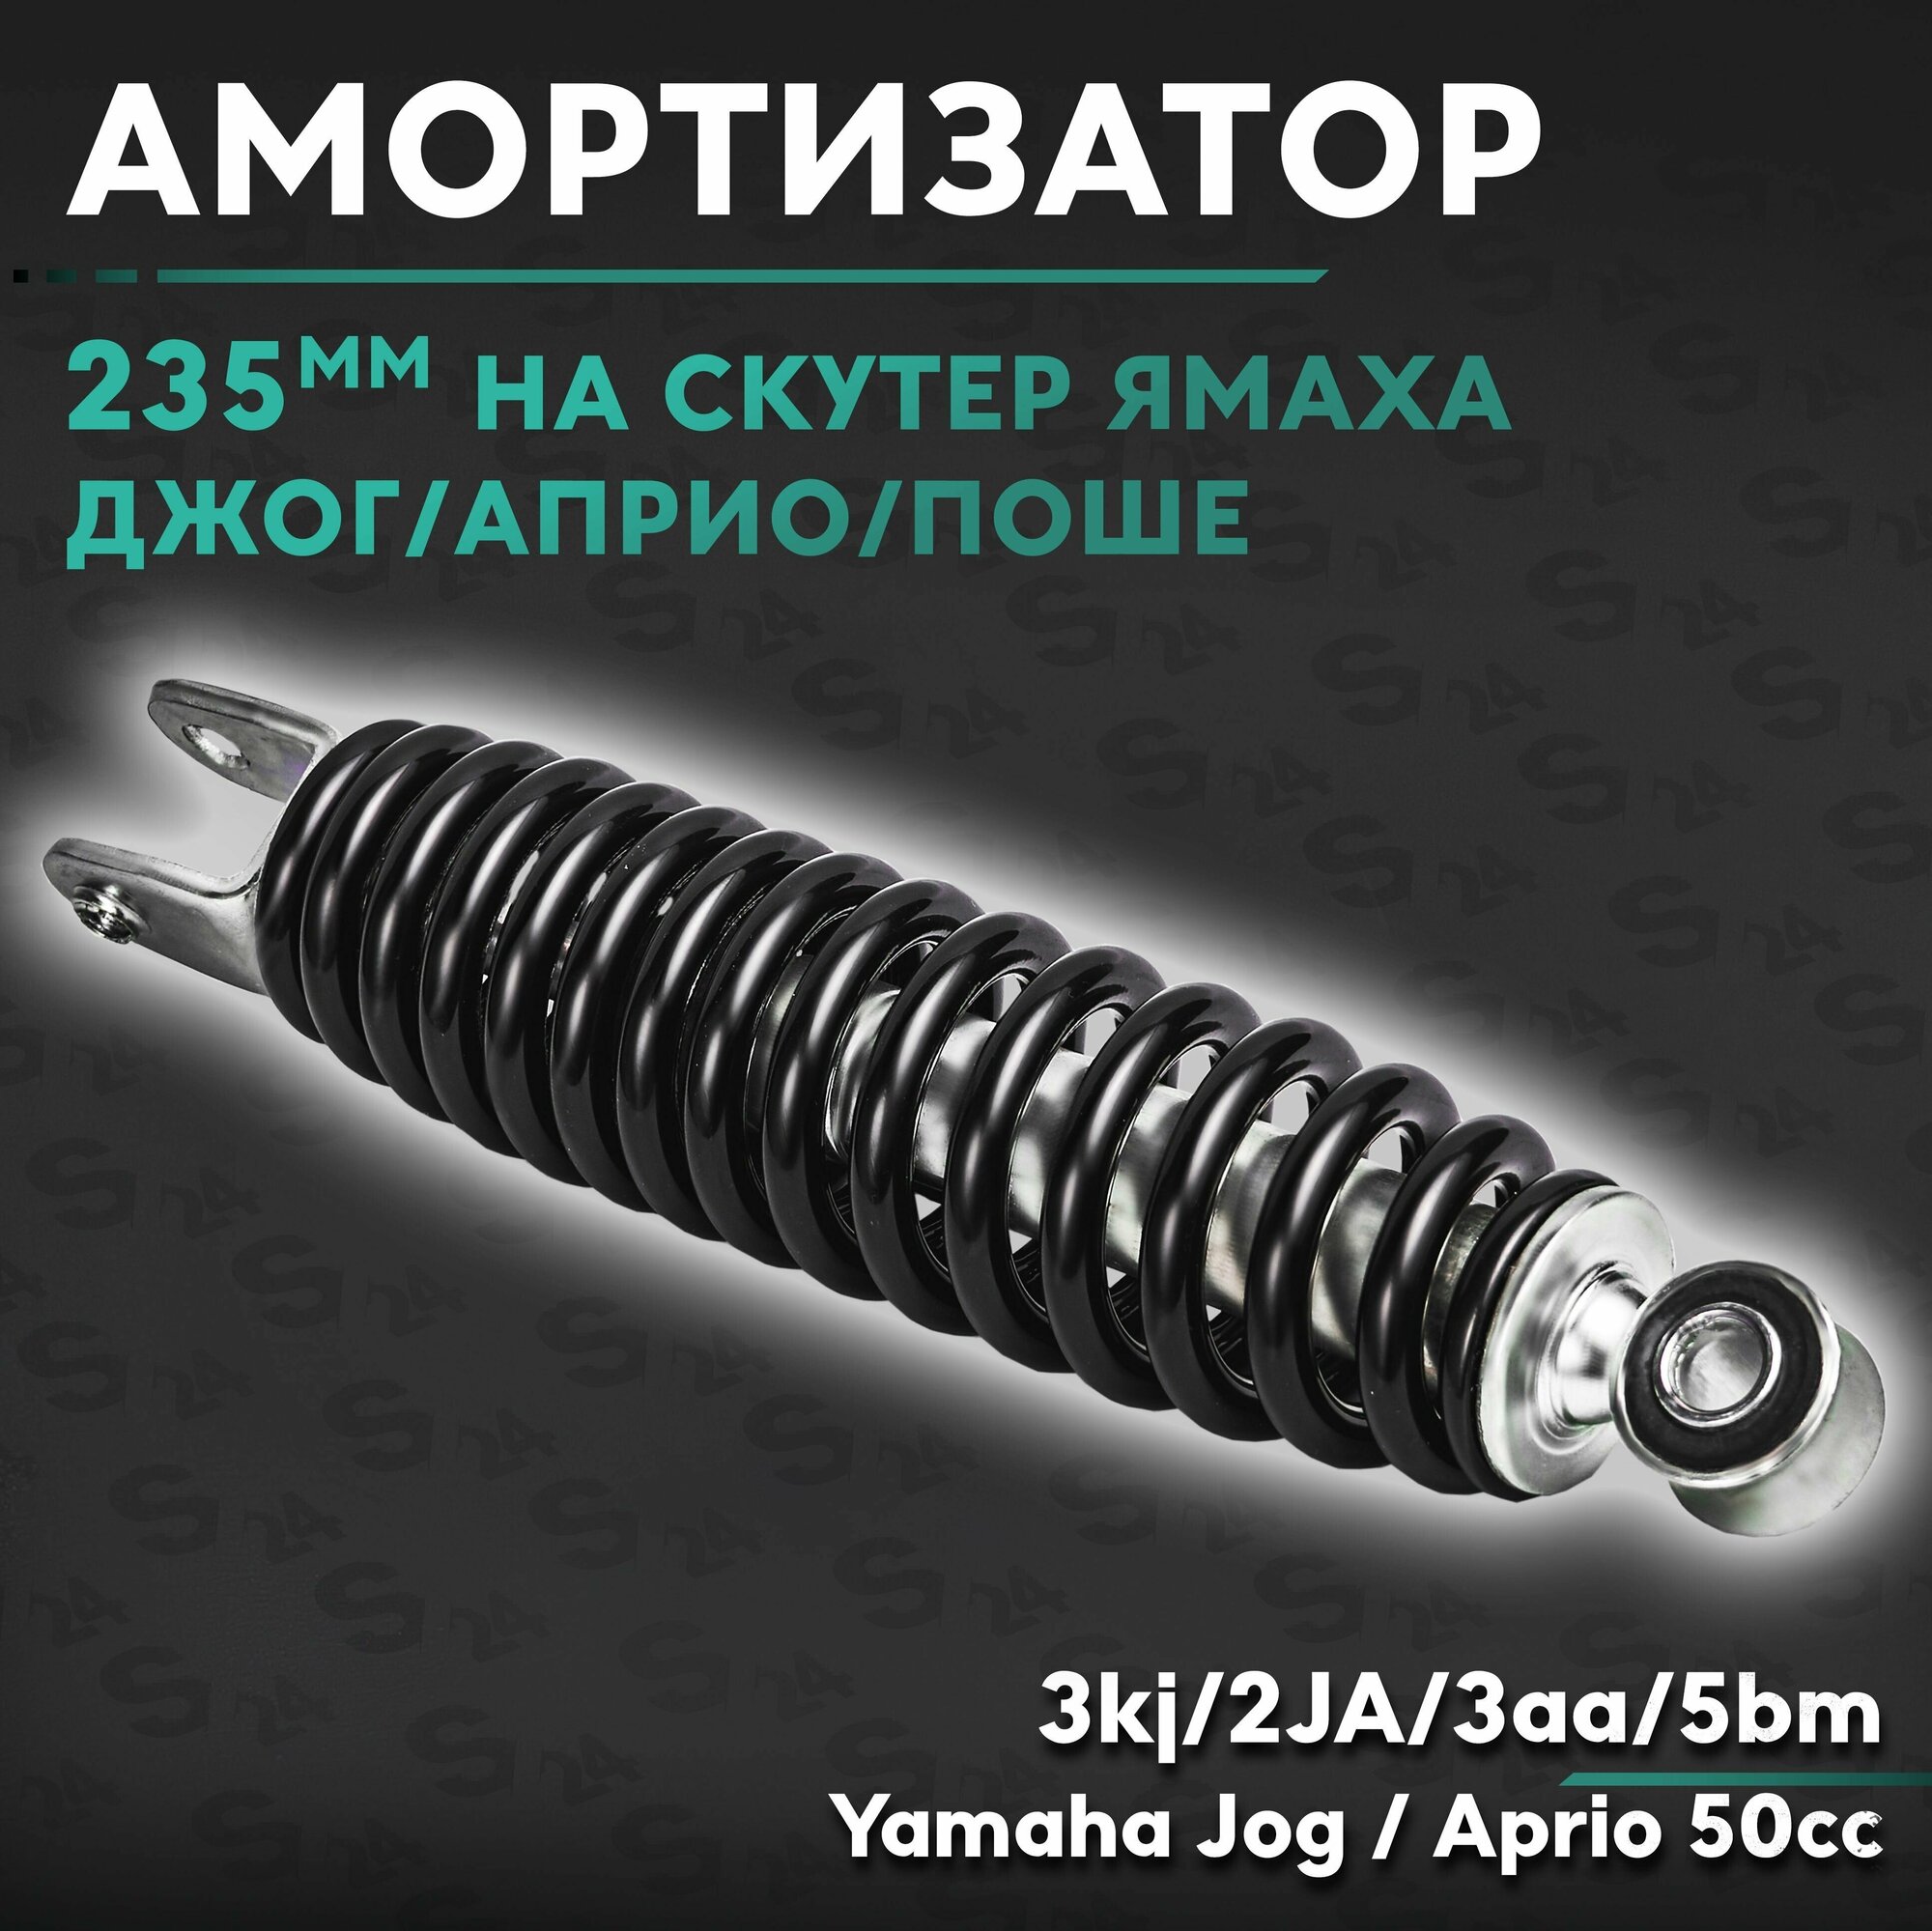 Амортизатор задний 235 мм на скутер Ямаха Джог/ Априо/ Поше 50 кубов/ регулируемый / 3kj 2JA 3aa 5bm / Yamaha Jog Aprio 50cc 235mm